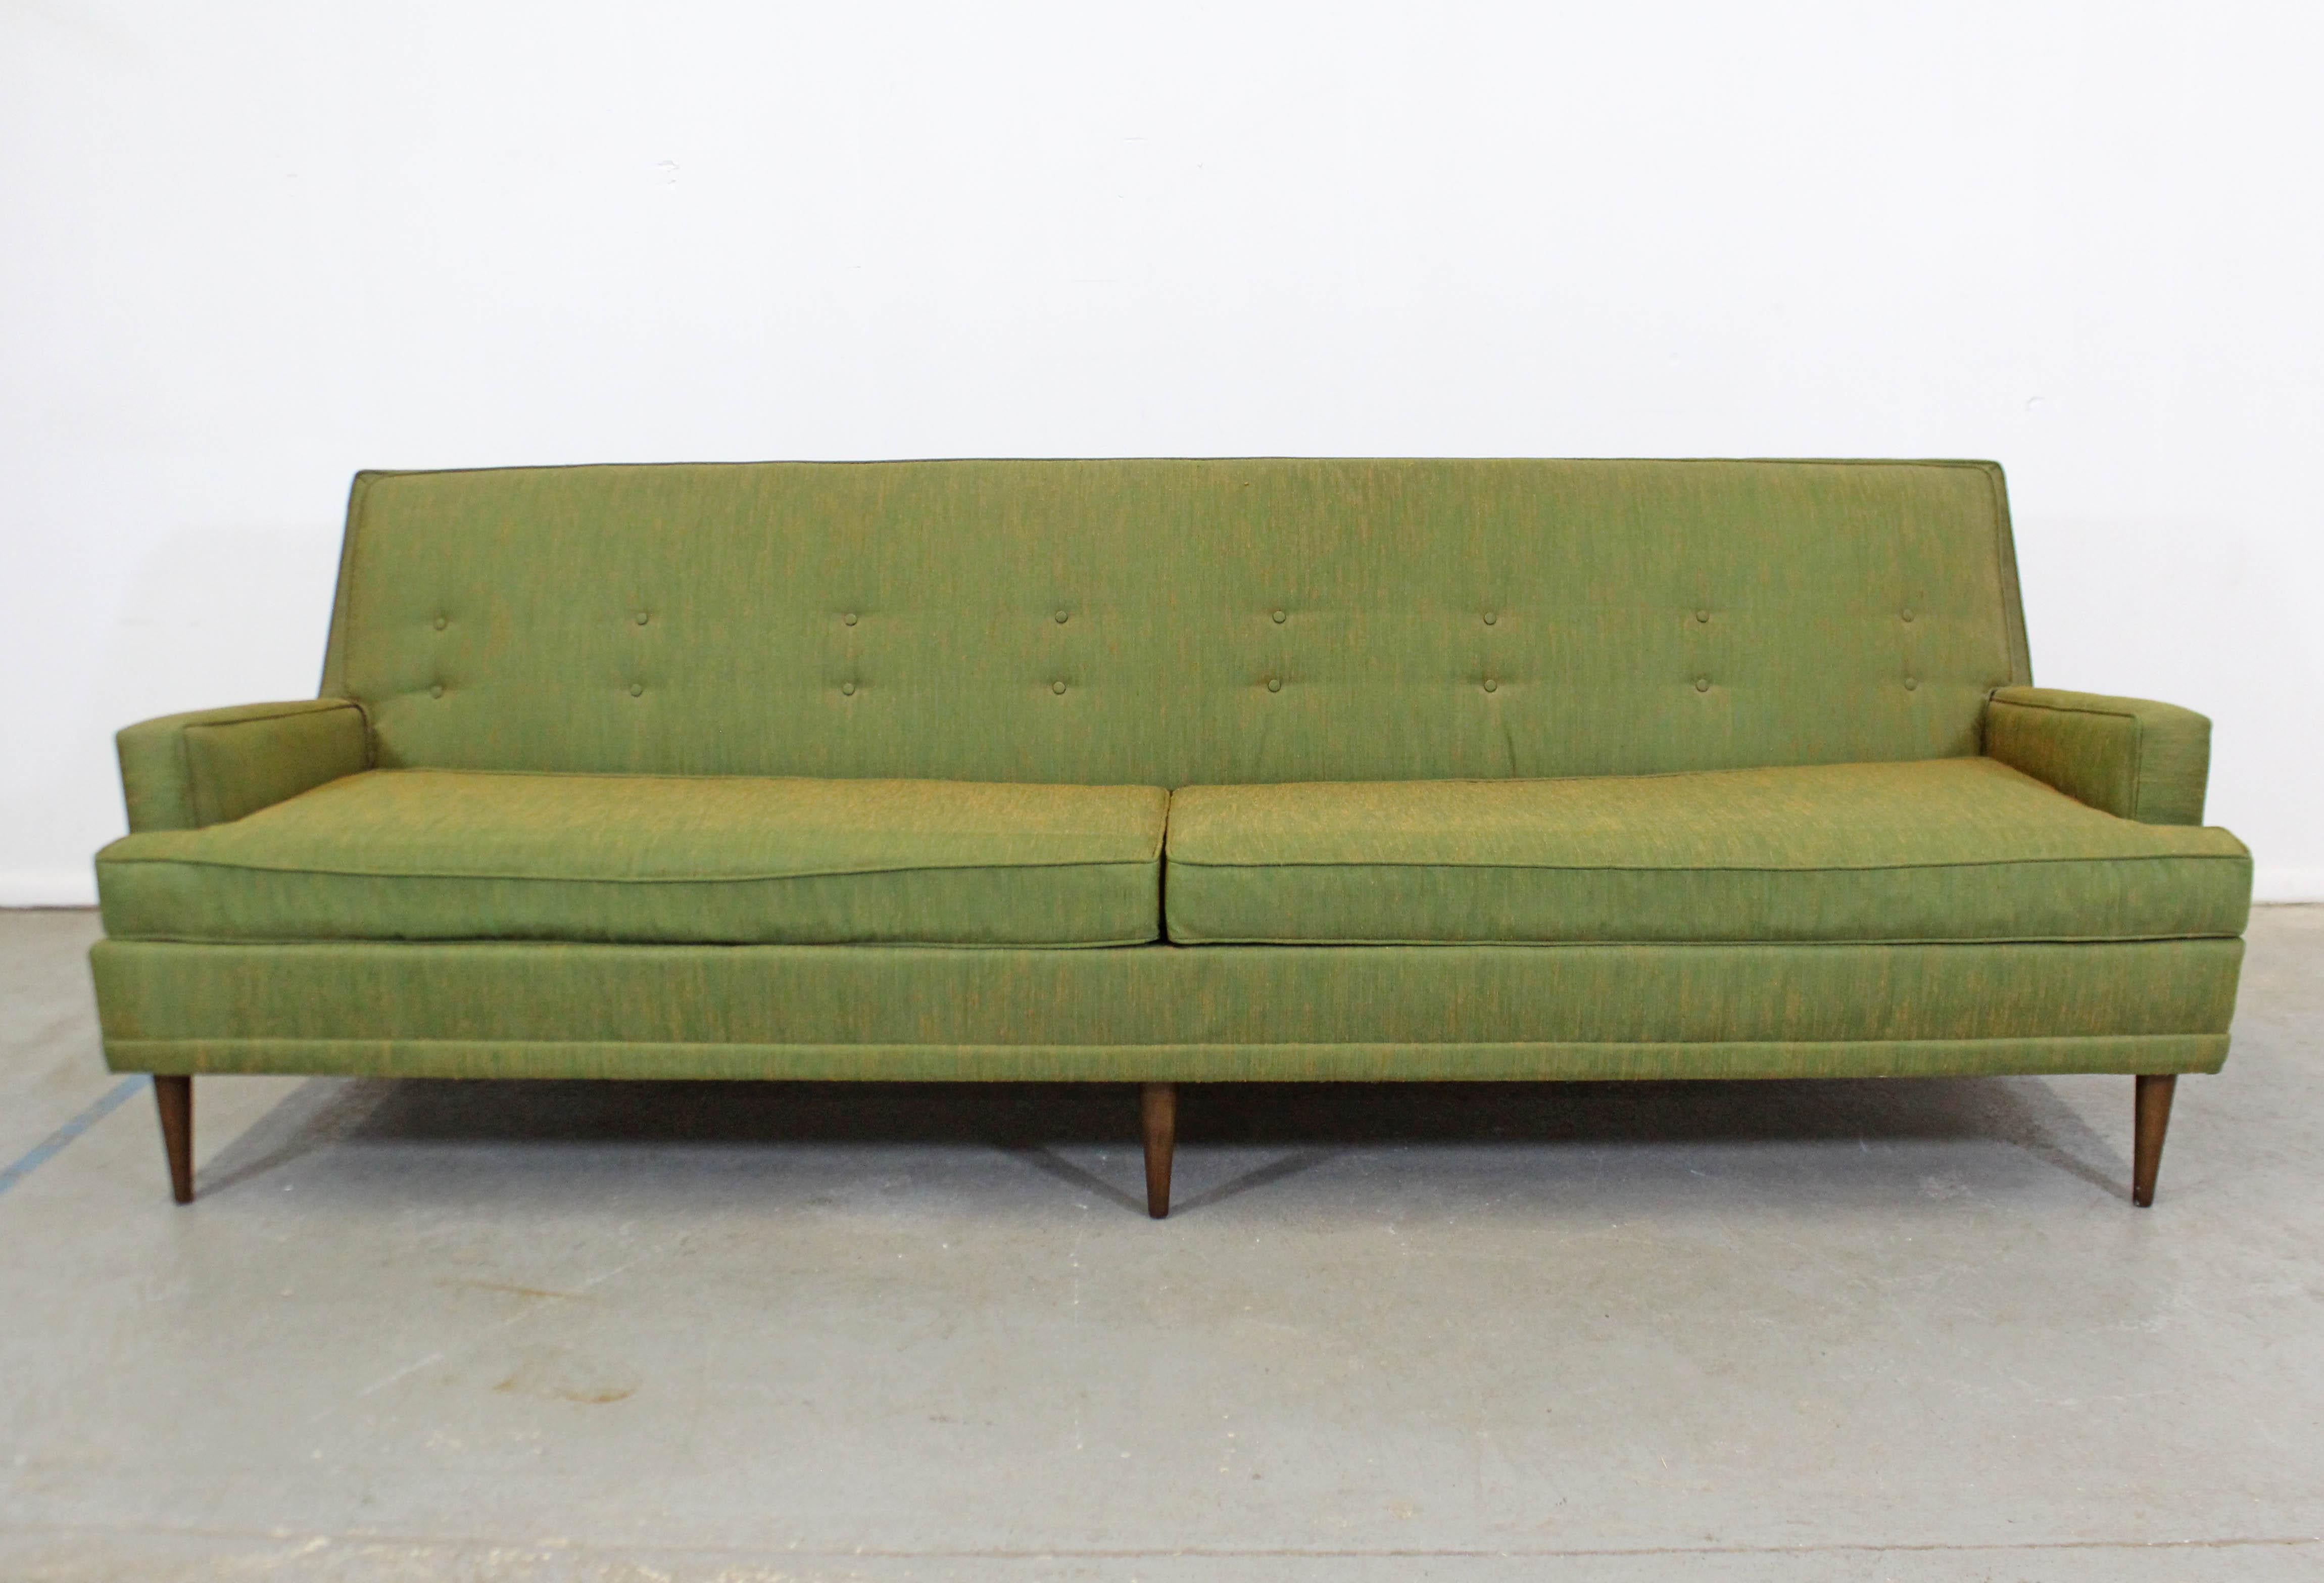 Modernes langes grünes Kroehler Sofa aus der Jahrhundertmitte (Moderne der Mitte des Jahrhunderts)